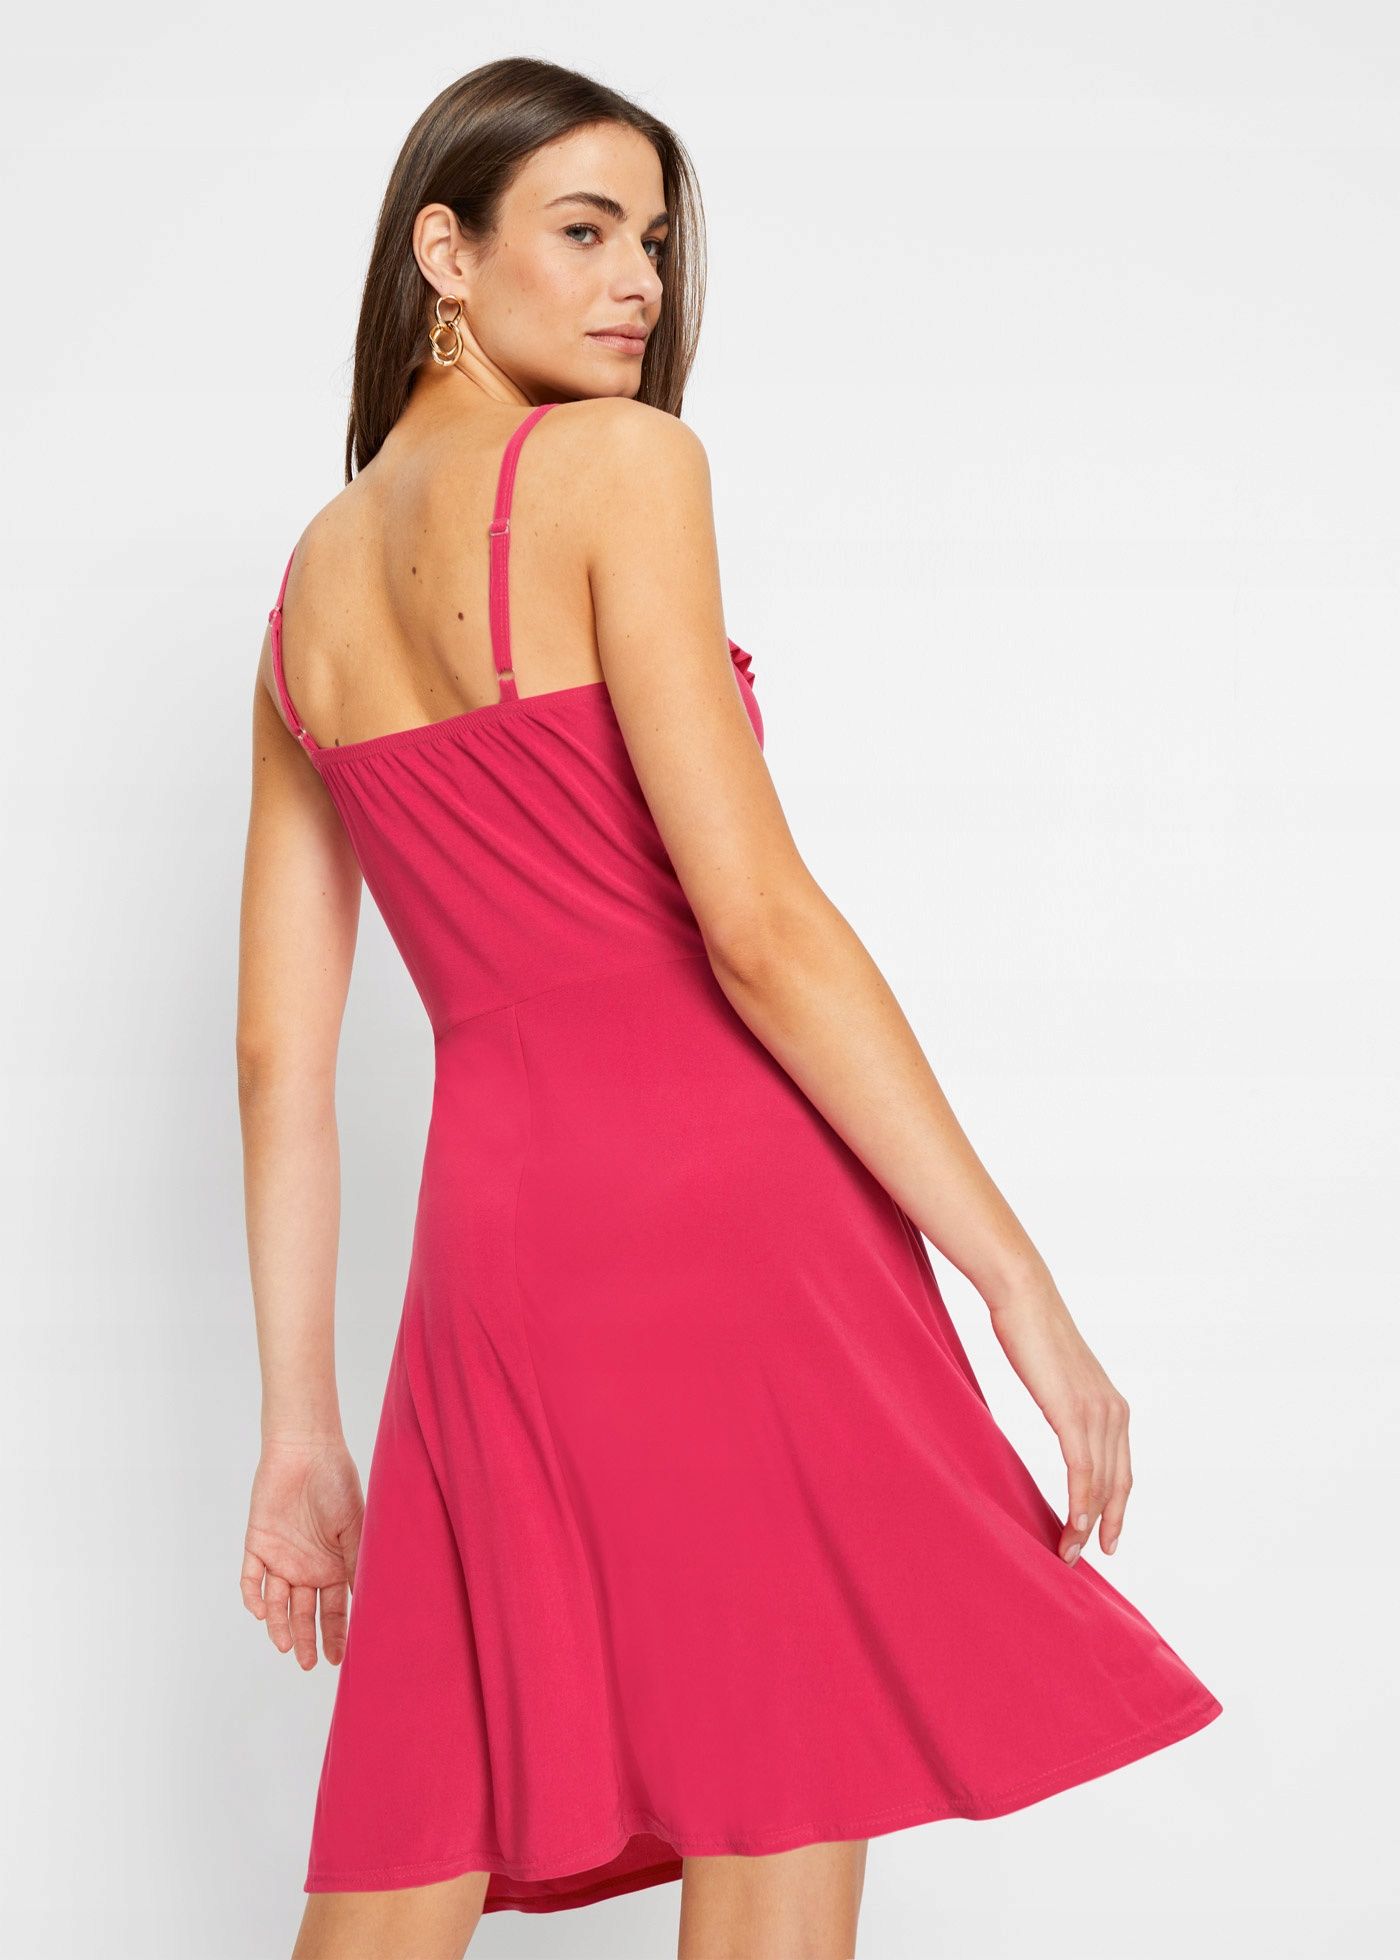 B.P.C sukienka różowa na ramiączka 40/42.